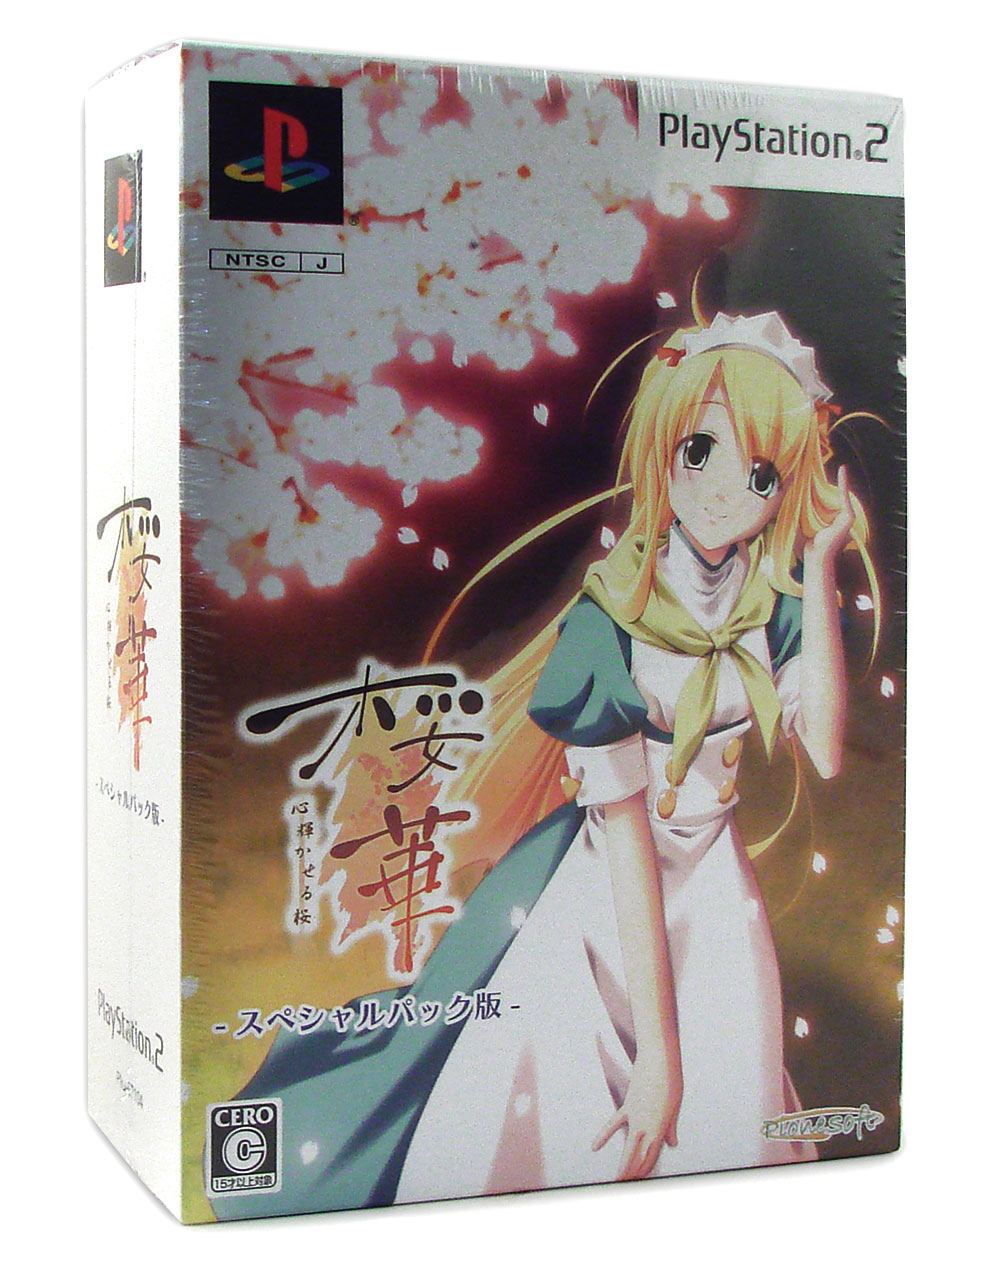 Sakura Hana [Limited Edition] for PlayStation 2 - Bitcoin 